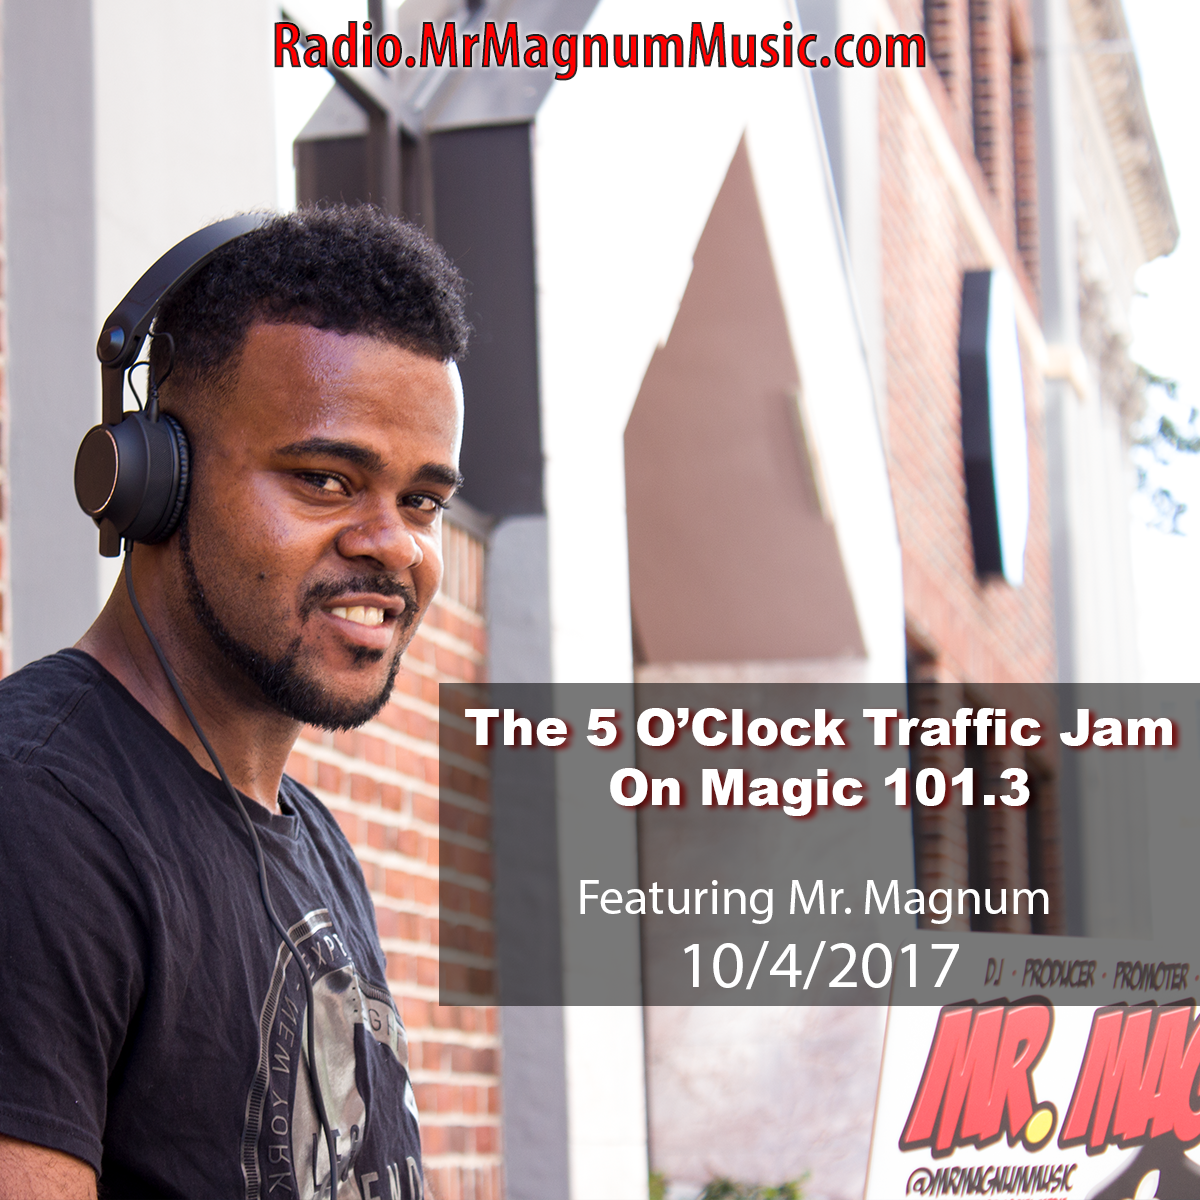 The 5 O'Clock Traffic Jam 20171004 featuring Gainesville's #1 DJ, Mr. Magnum on Magic 101.3